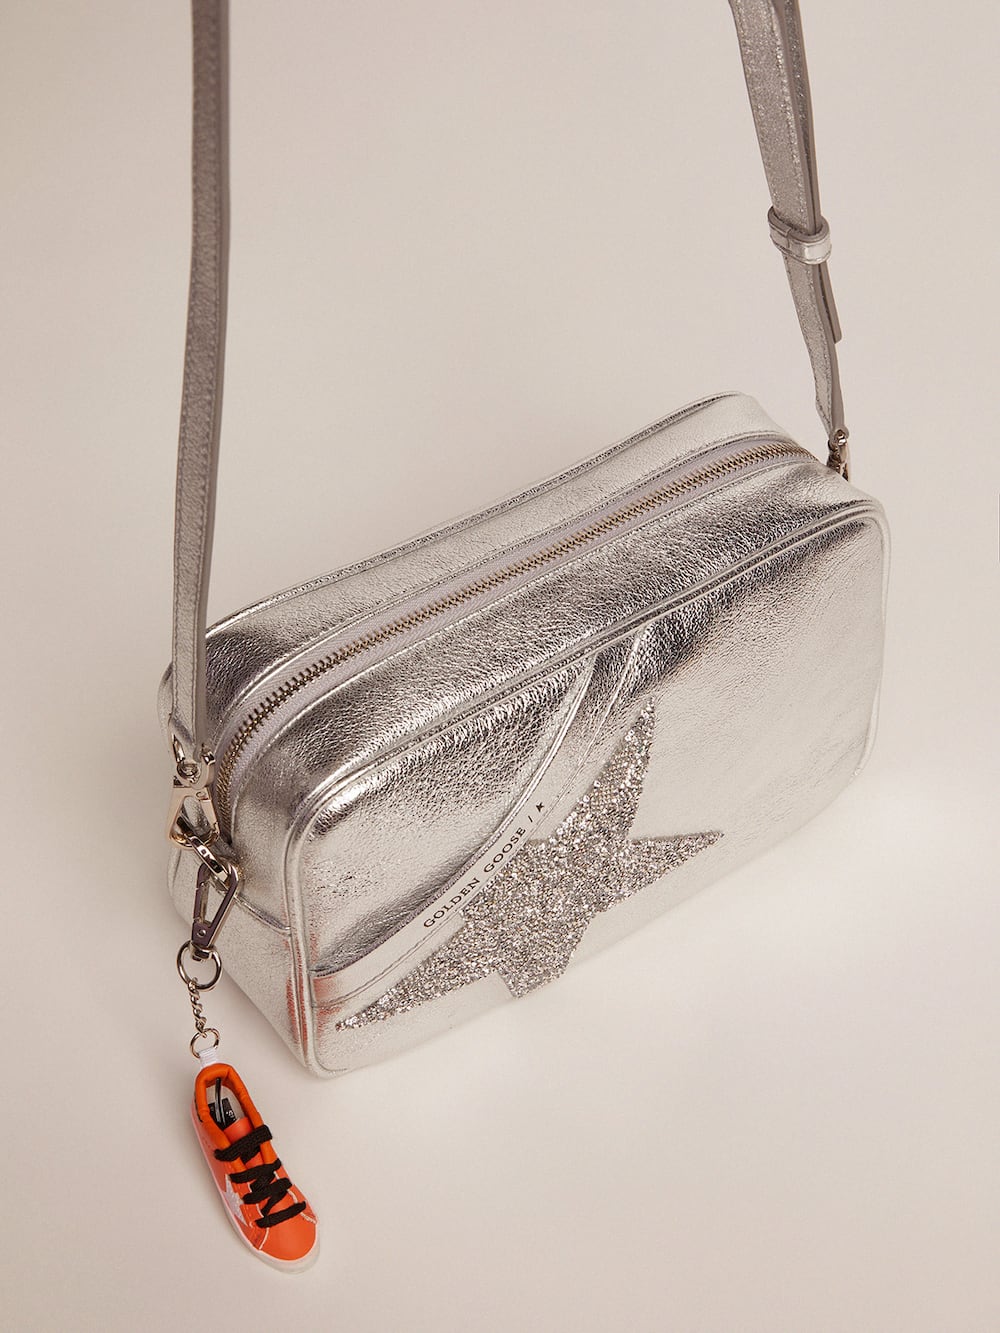 Golden Goose - Silver Star Bag in metallic leather with Swarovski crystal star in 